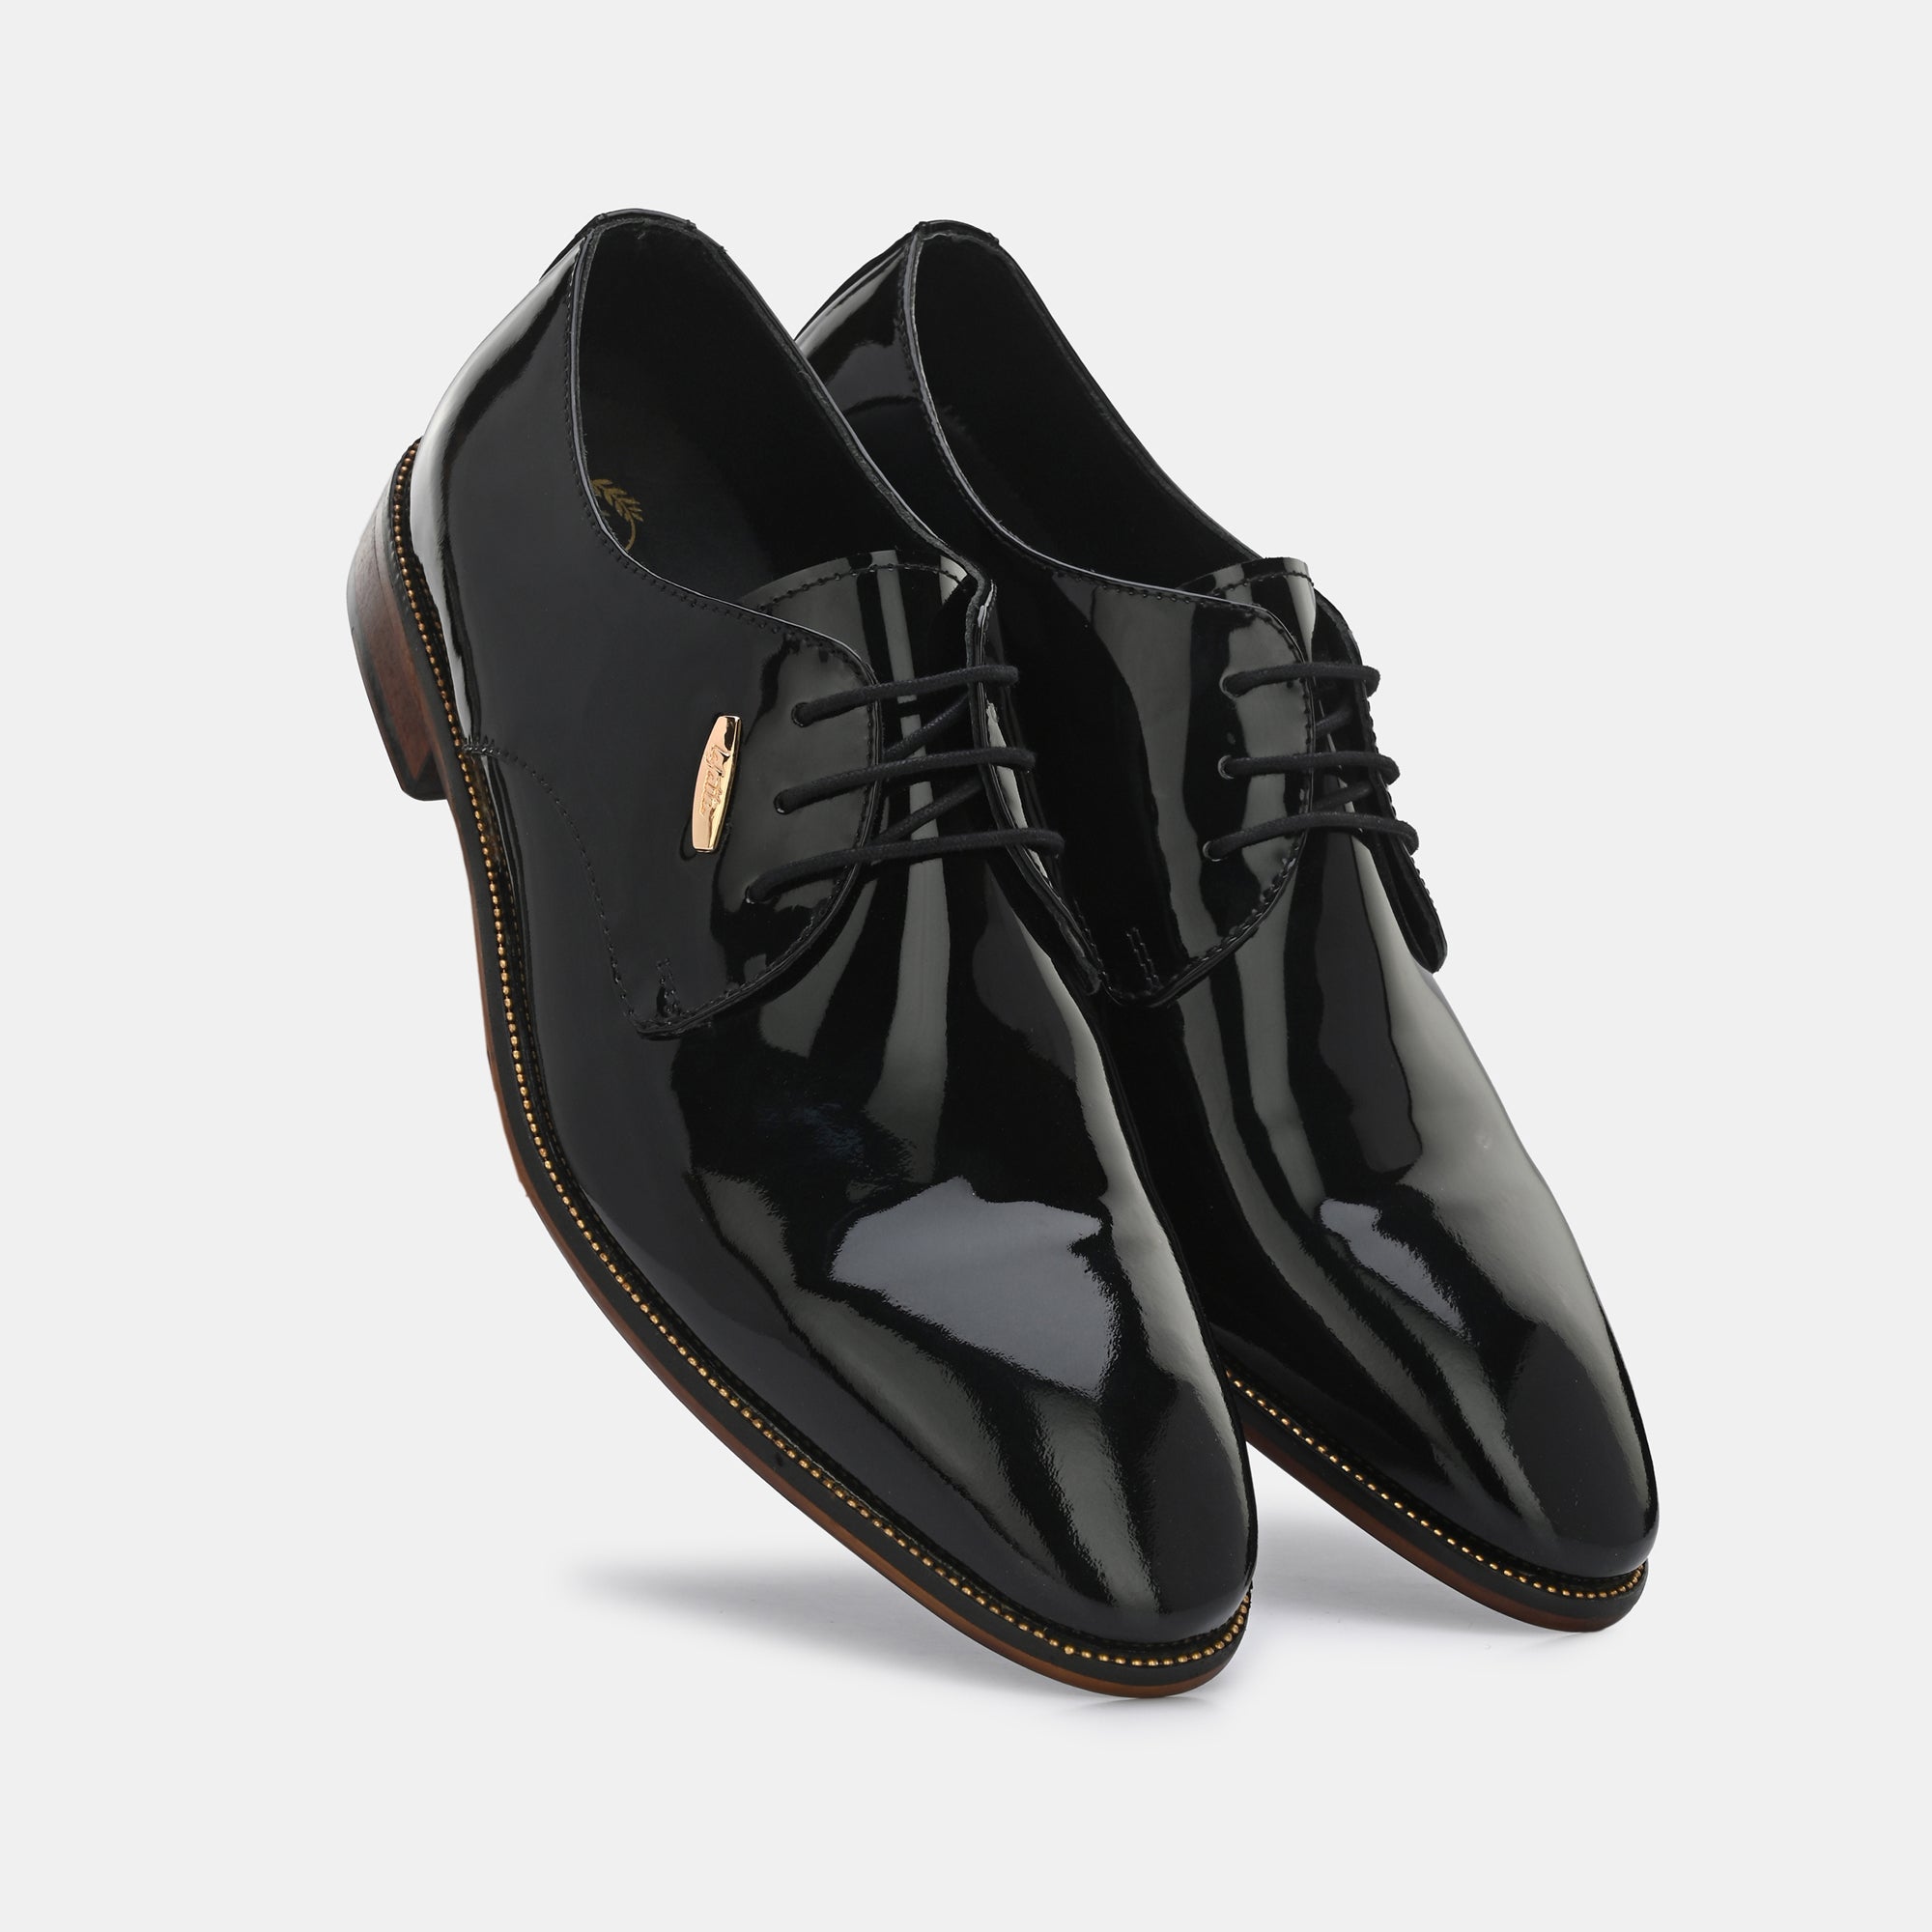 Patent Black Lace-Up Shoes by Lafattio